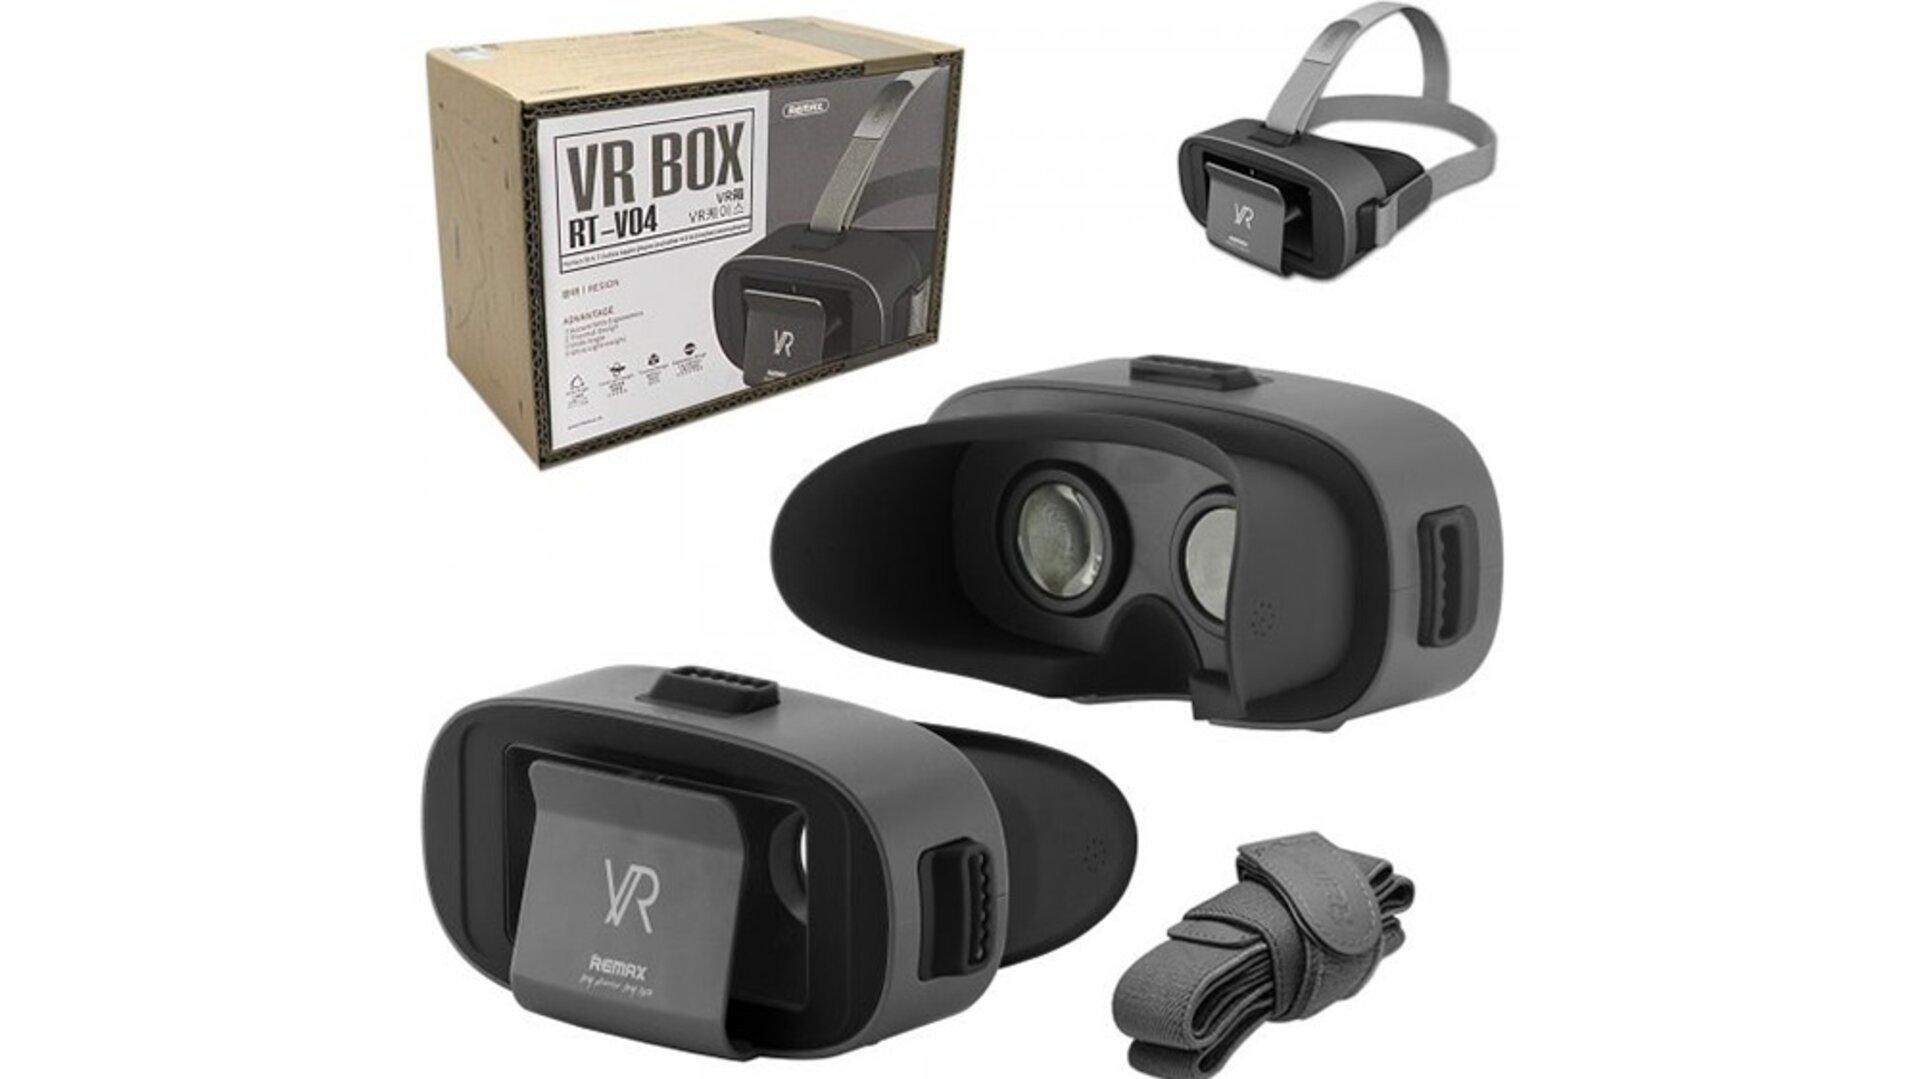 REMAX RT-V04 VR BOX ვირტუალური სათვალე